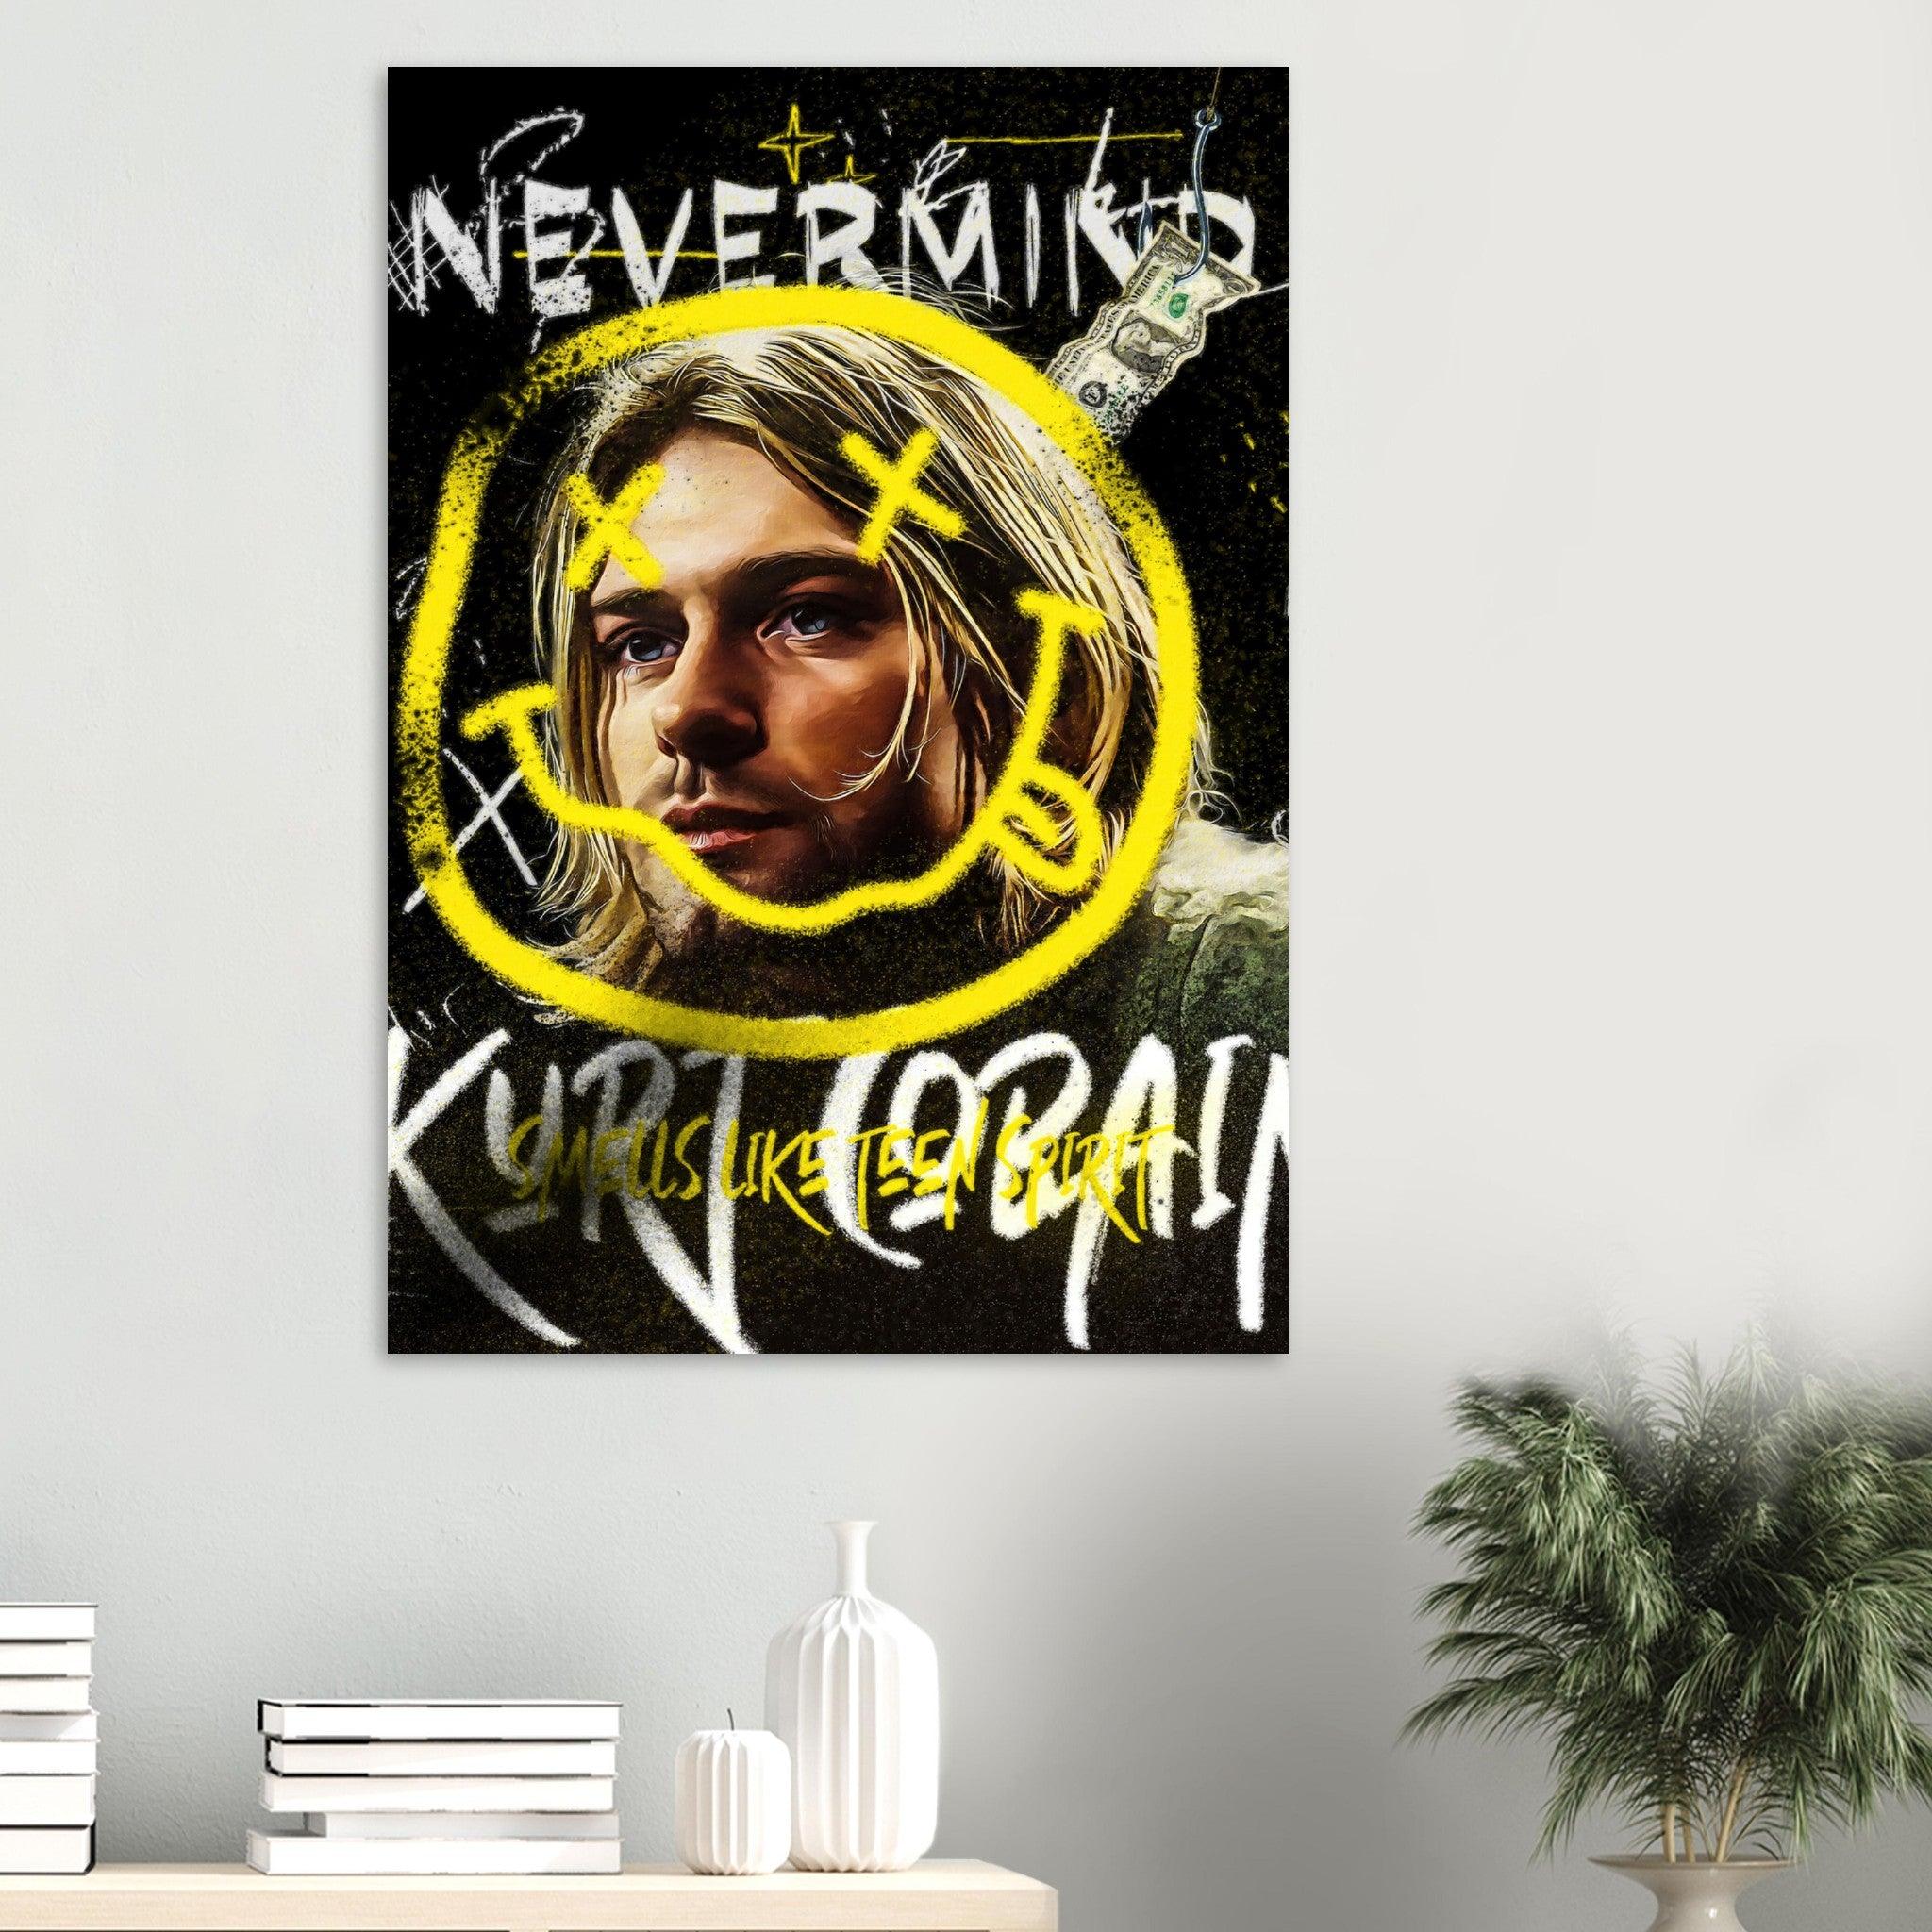 Kurt Cobain "Nevermind" - METALPOSTER